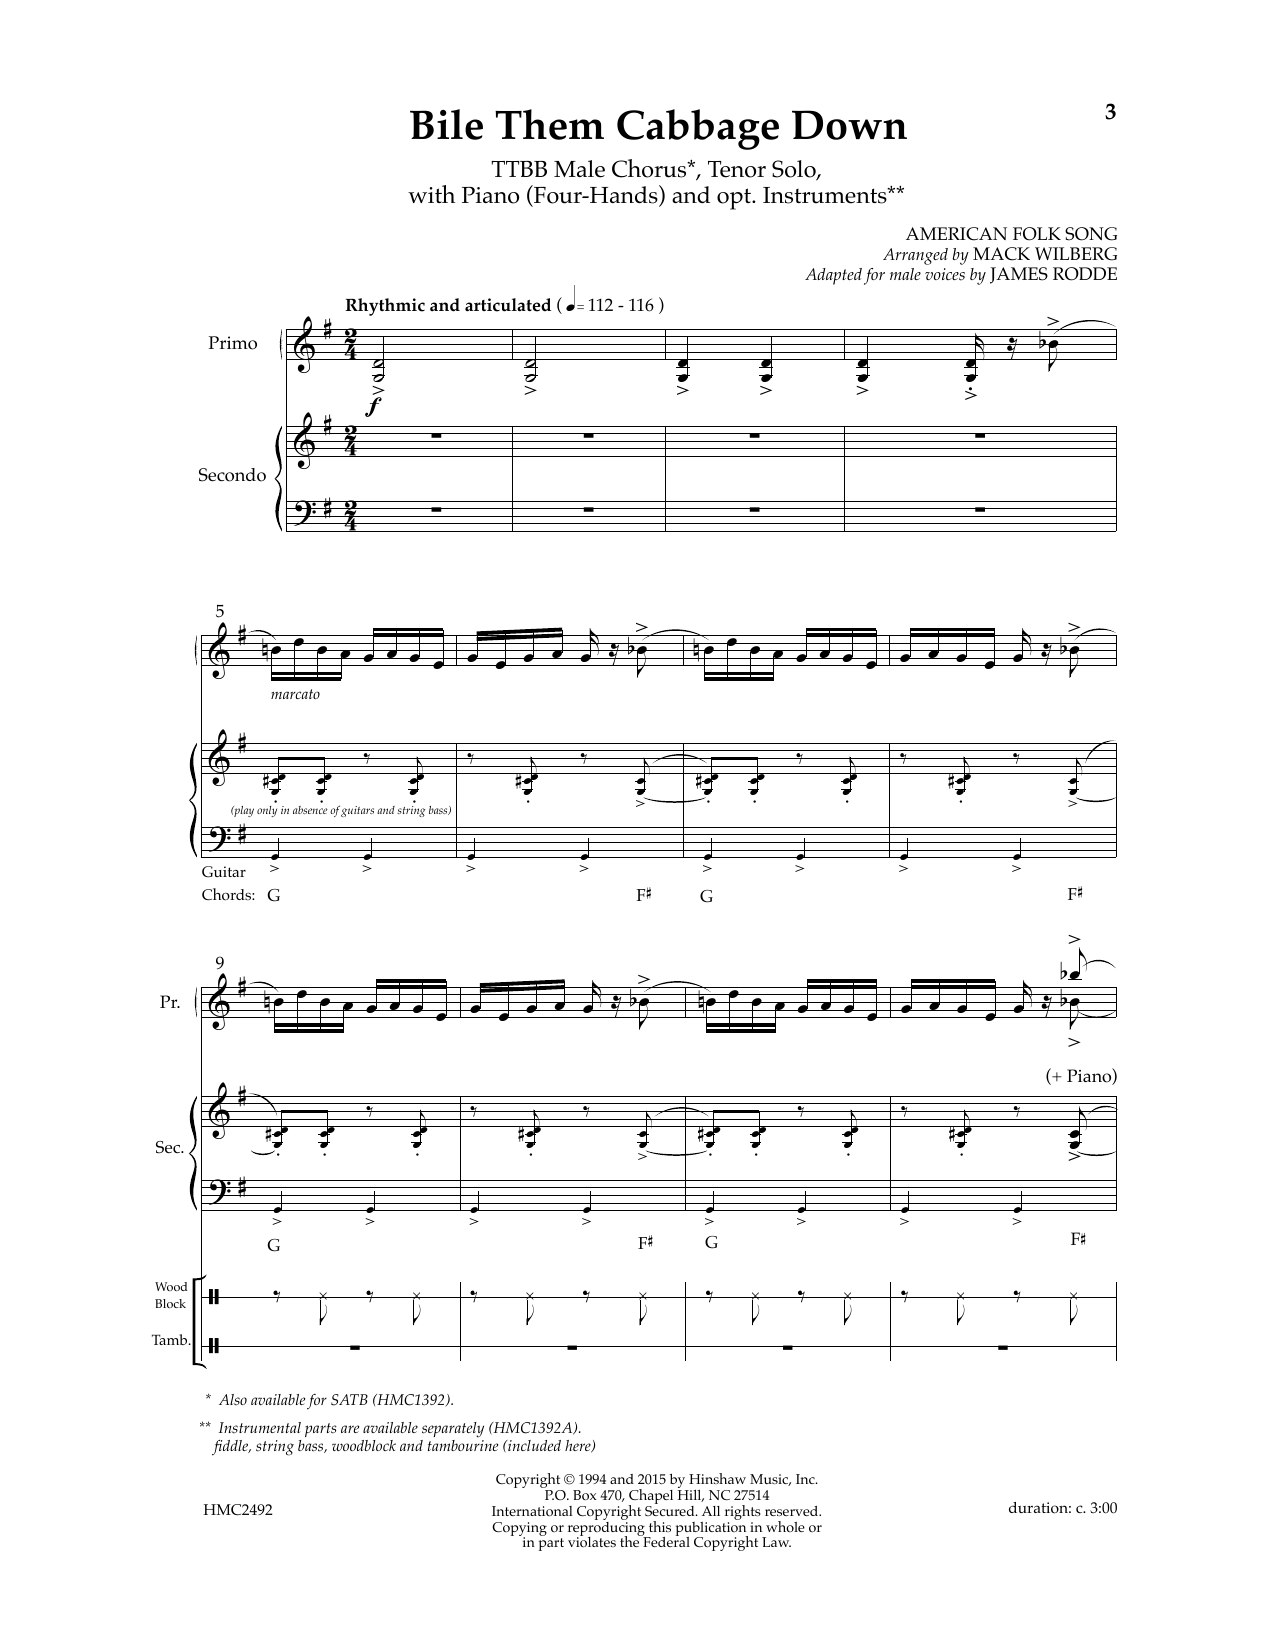 Mack Wilberg Bile Them Cabbage Down (adapt. James Rodde) Sheet Music Notes & Chords for TTBB Choir - Download or Print PDF